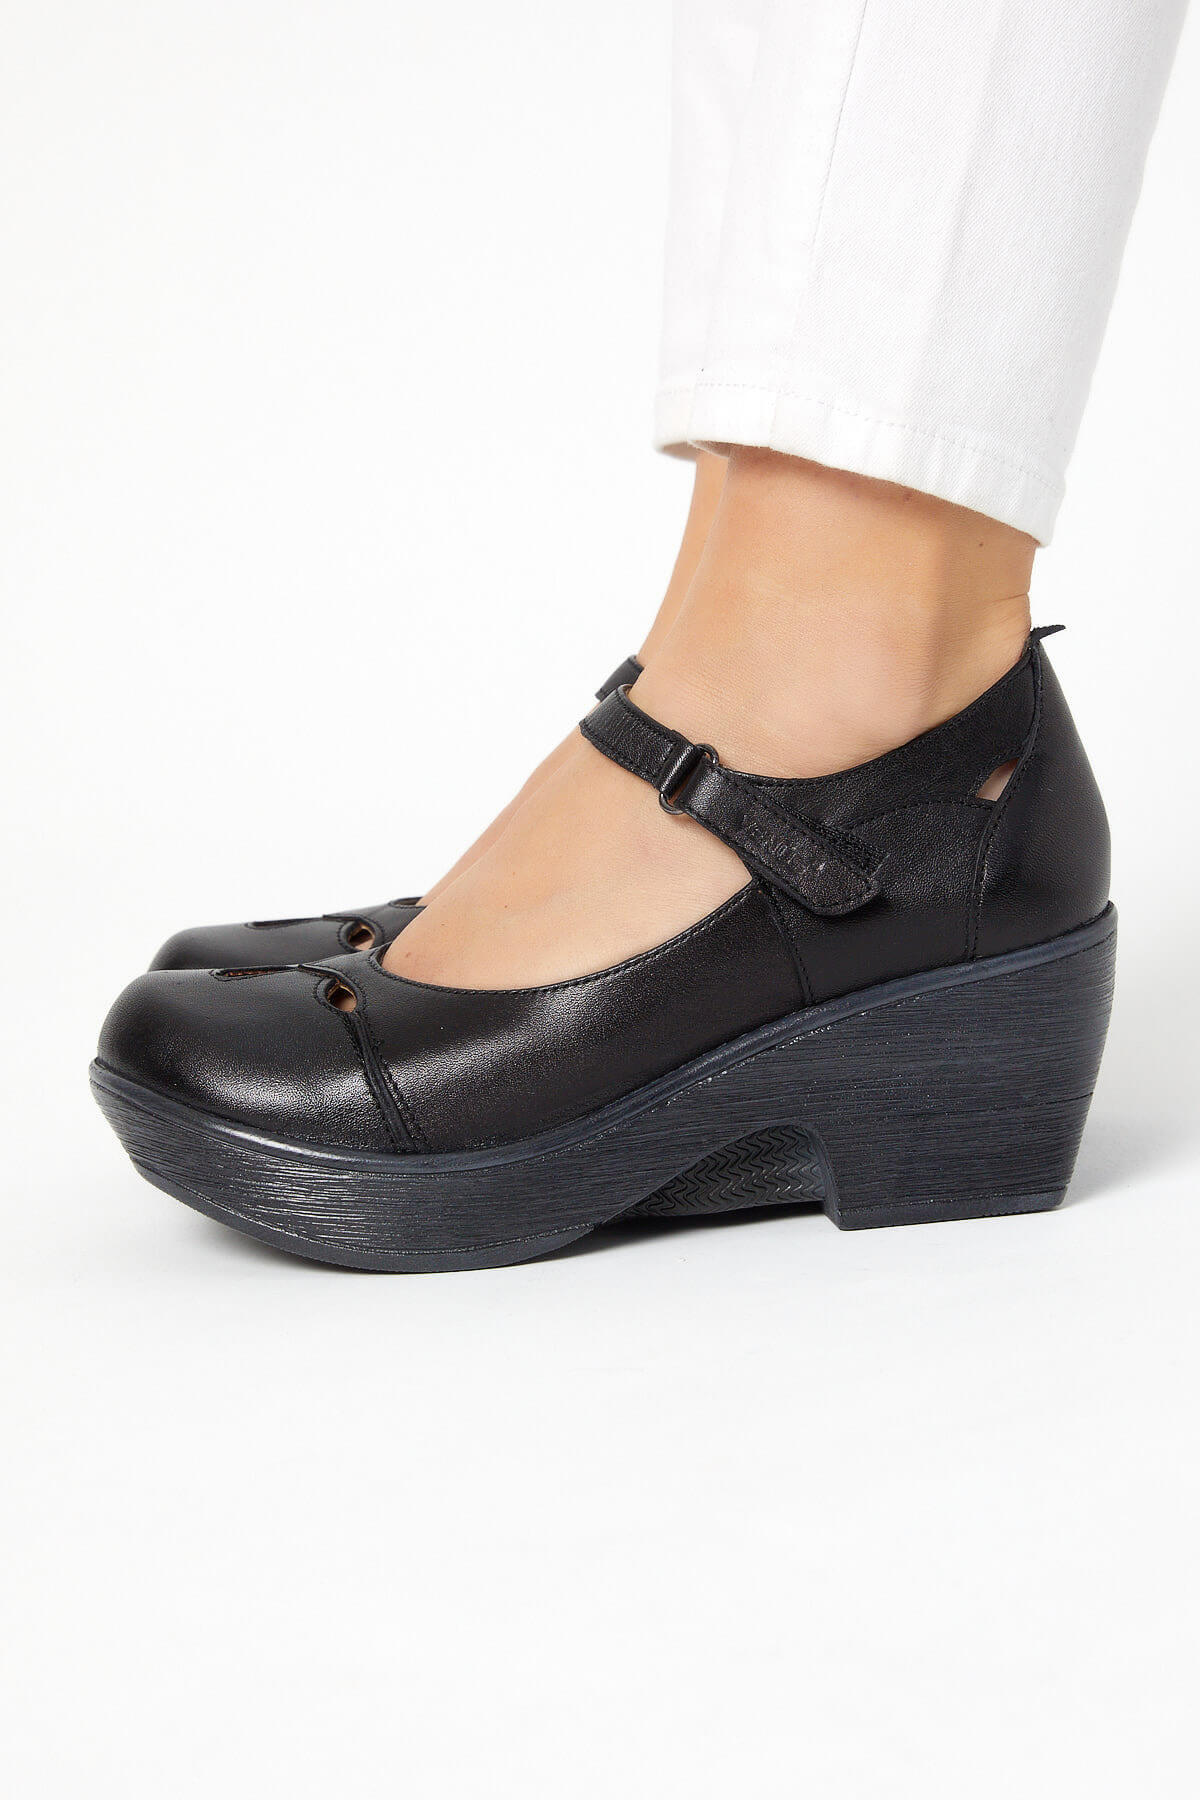 Kadın Apartman Topuk Deri Ayakkabı Siyah 1912501